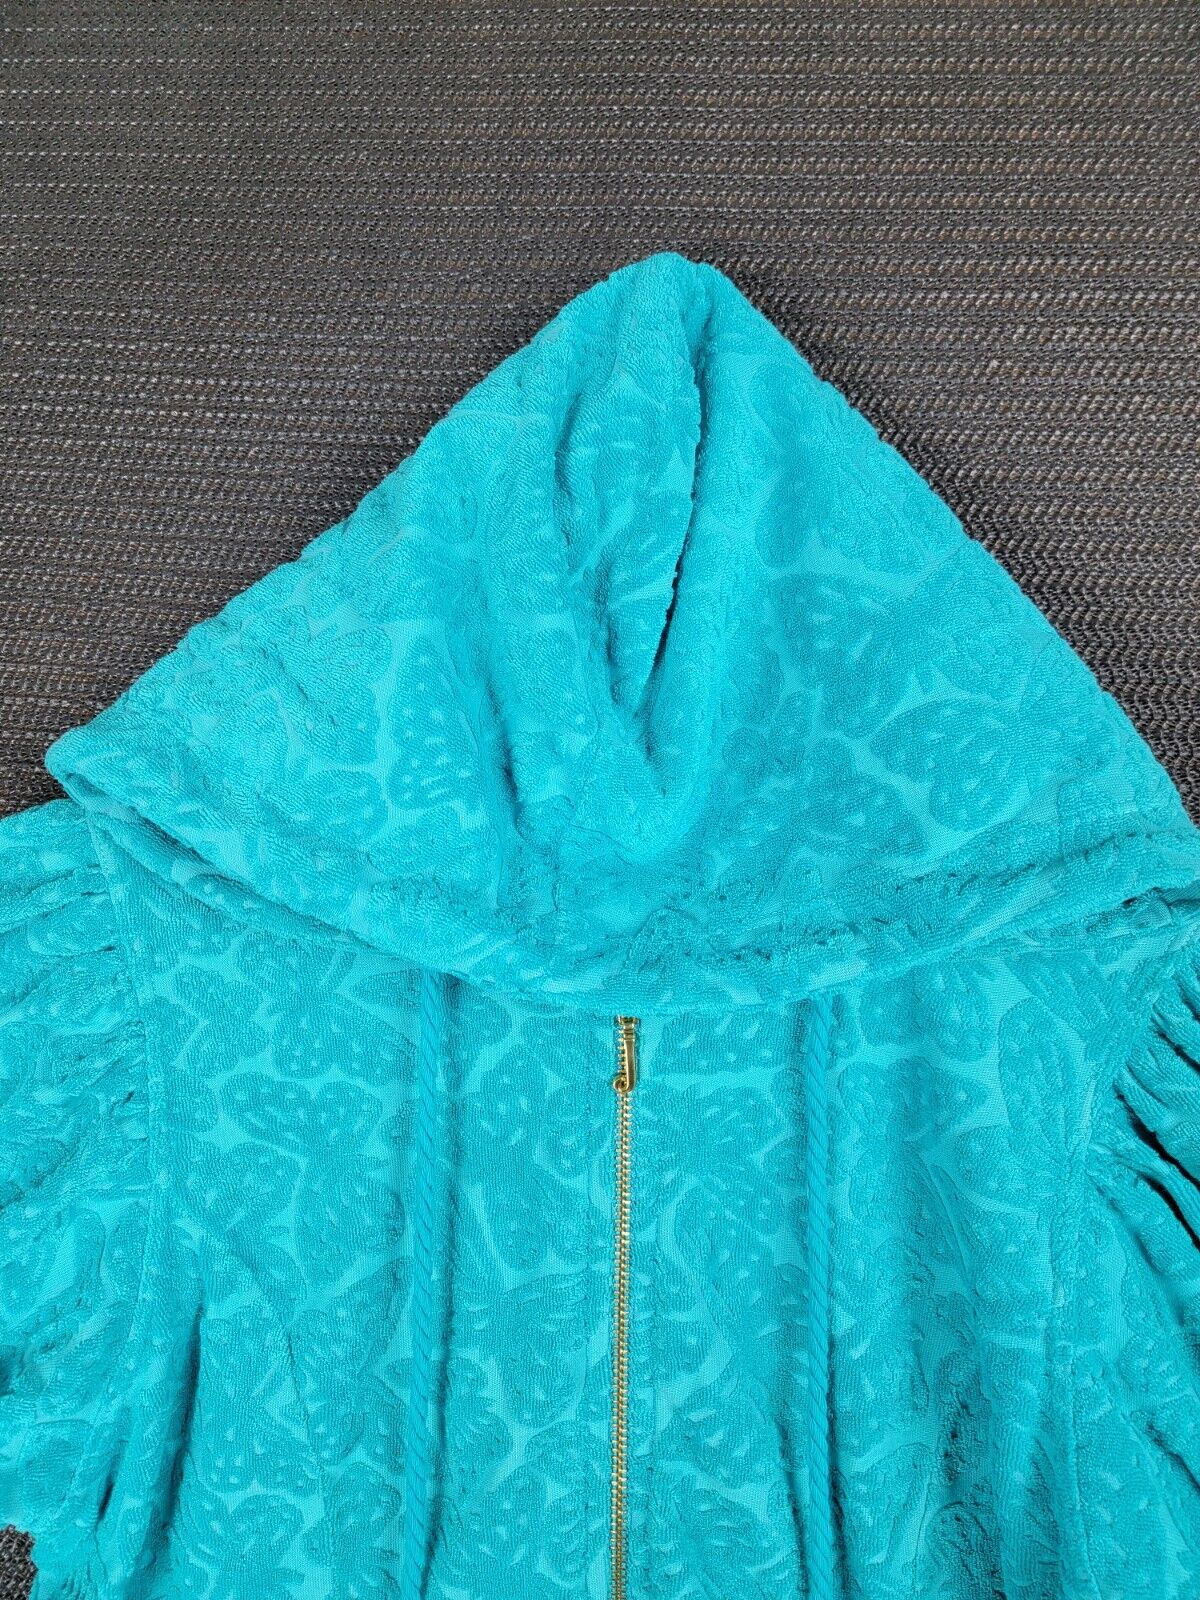 Juicy Couture zip up hoodie sweatshirt size XL Butterfly womens short-sleeve